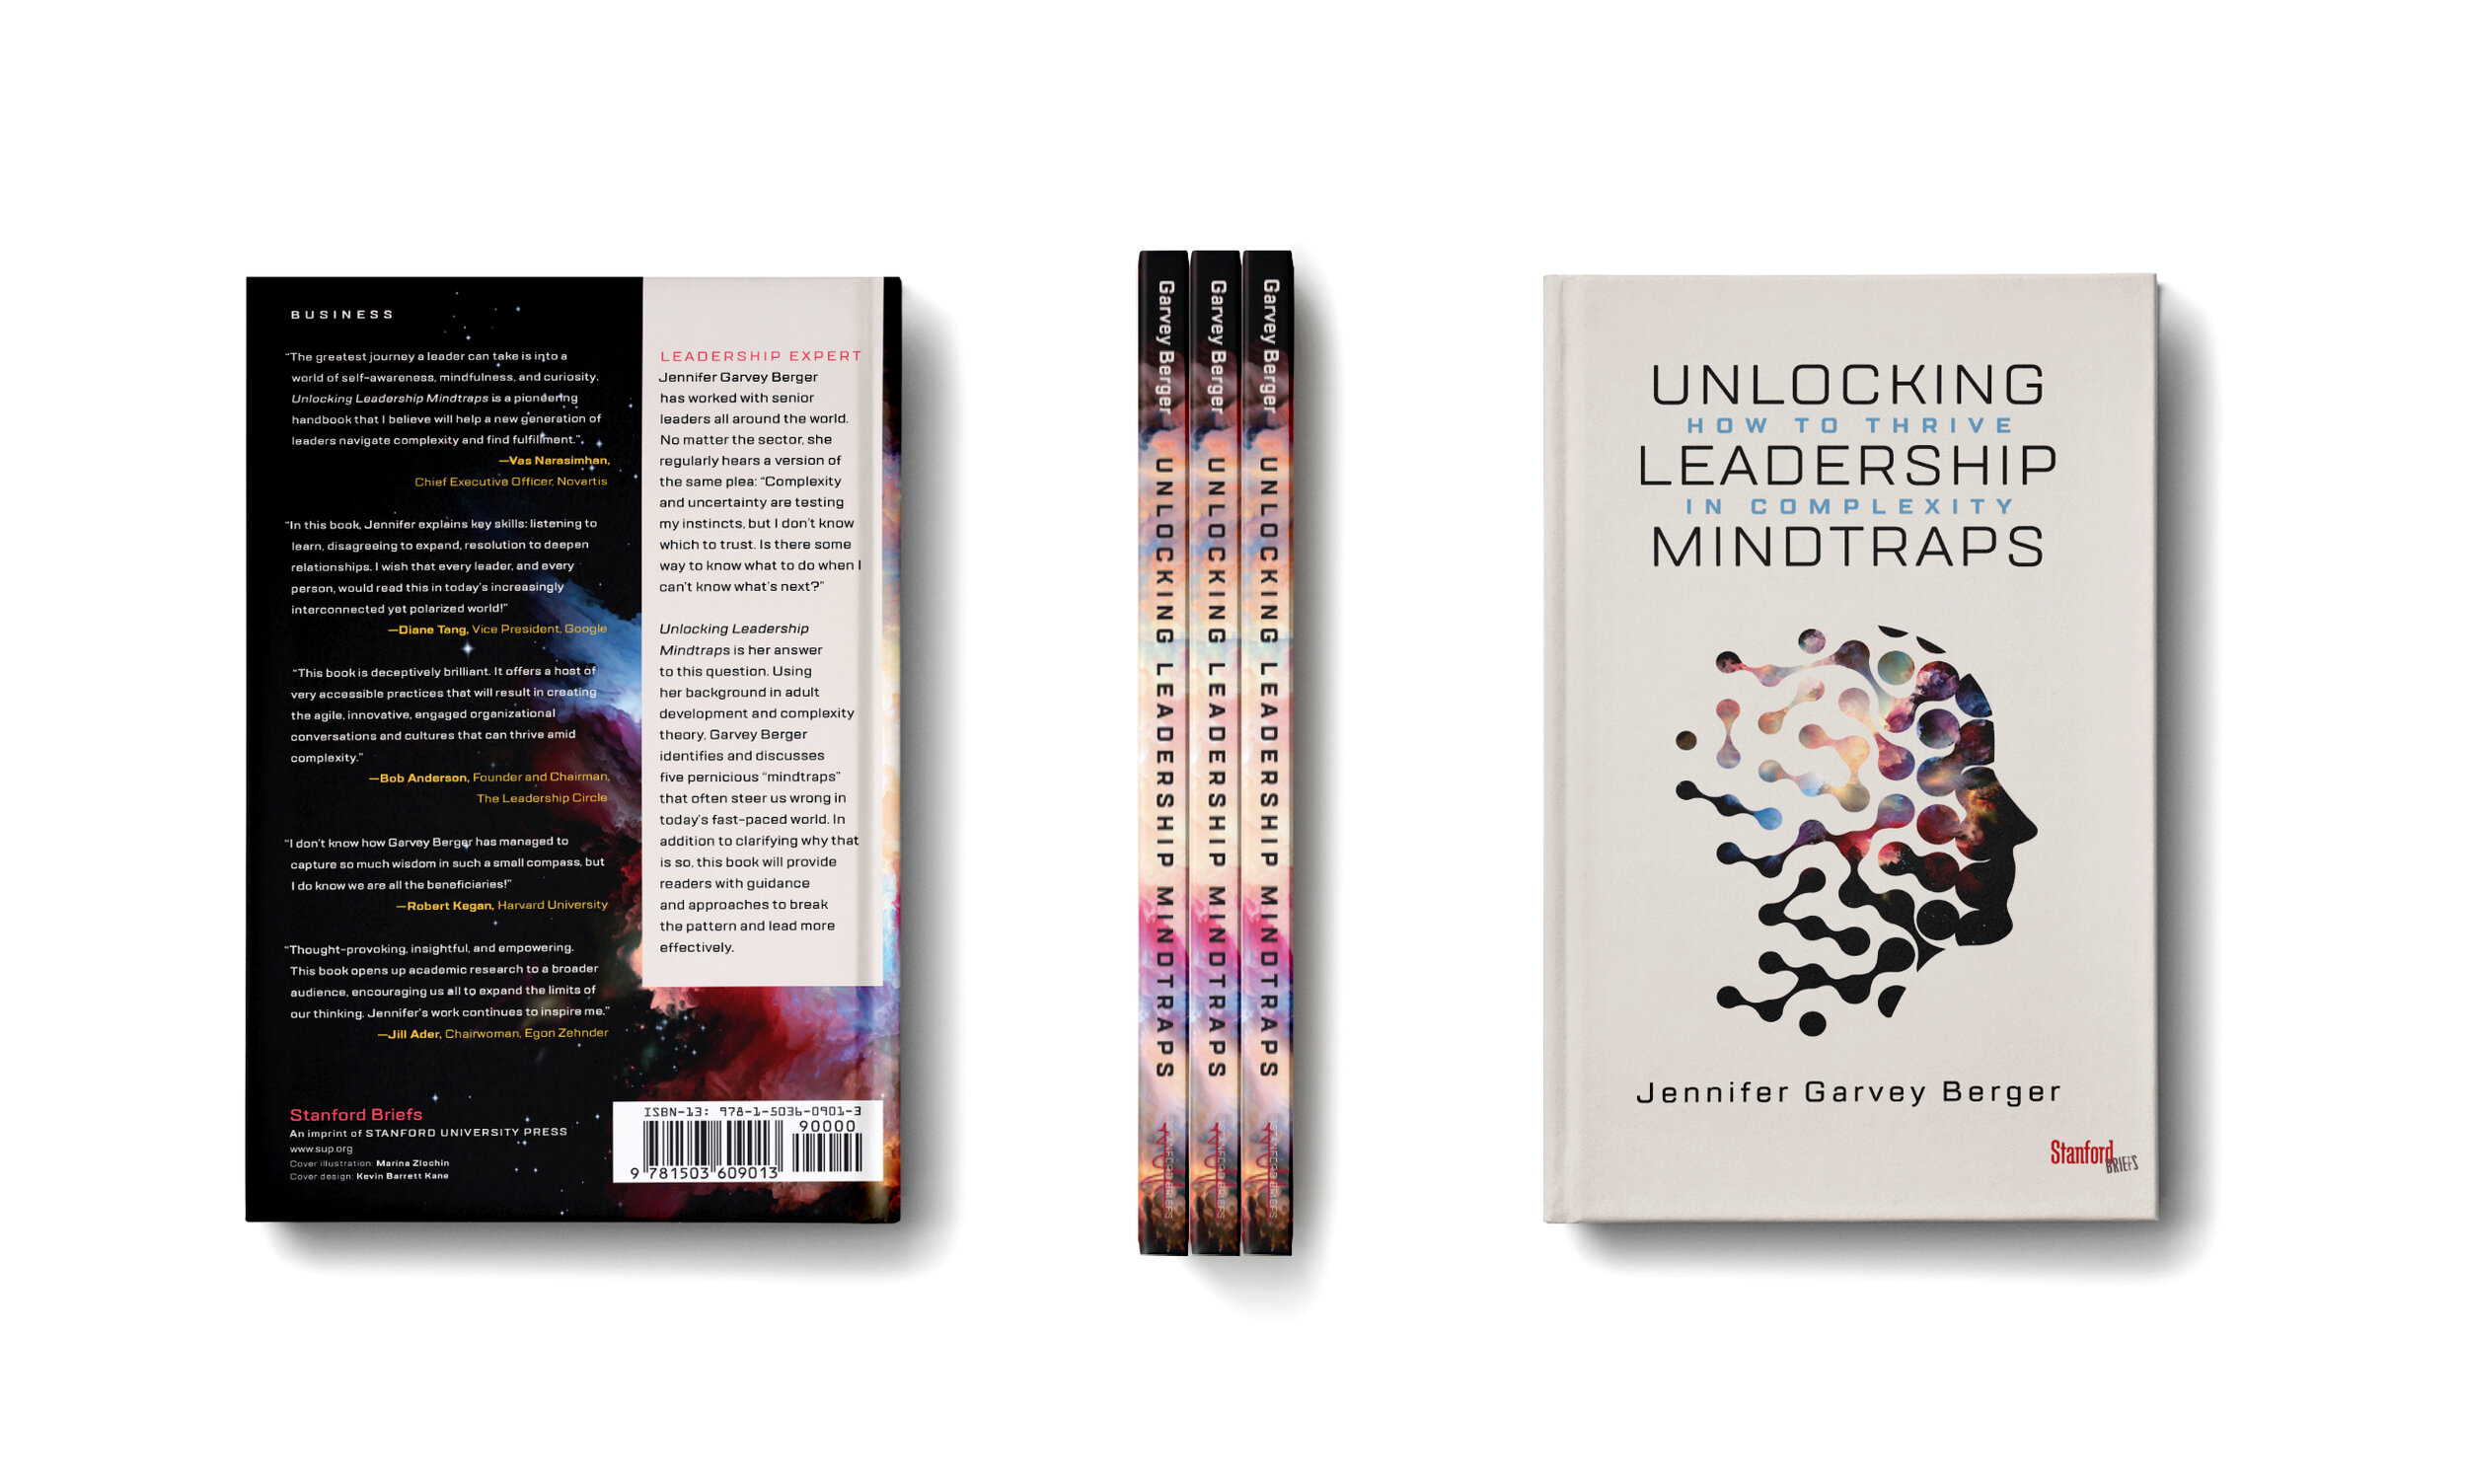 Unlocking Leadership Mindtraps, by Jennifer Garvey Berger (Stanford, 2018)